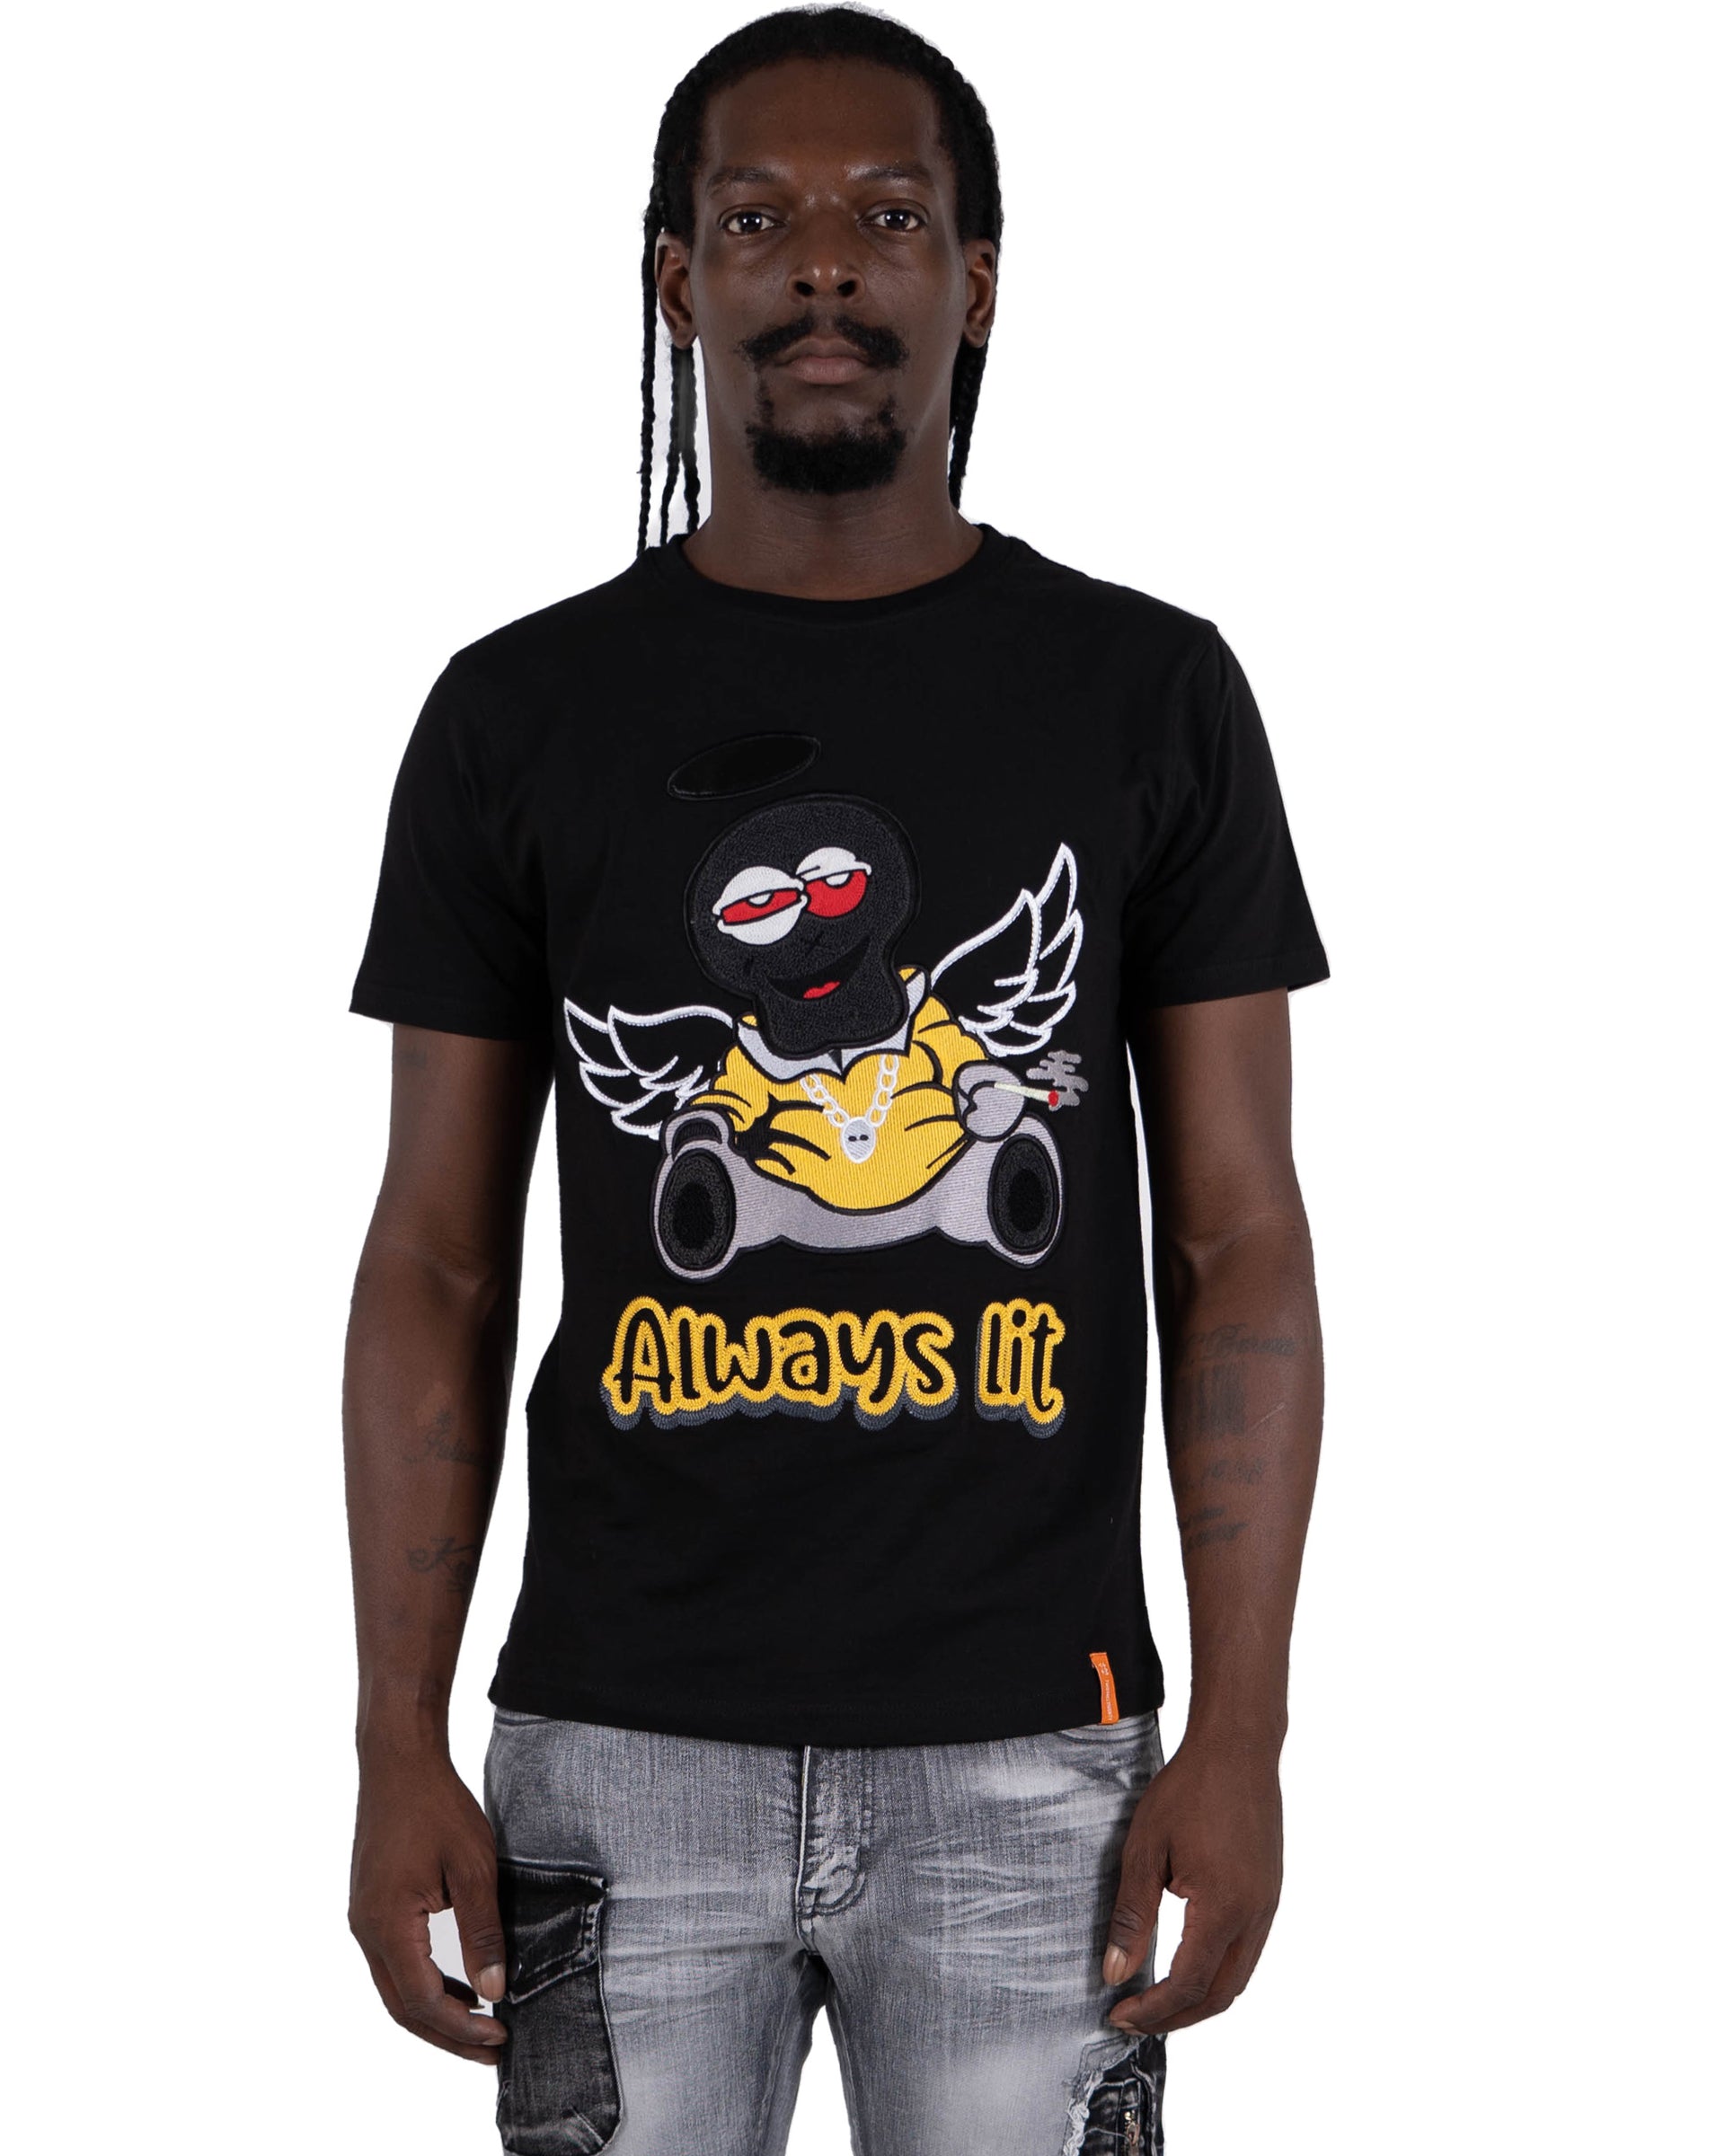 Men's "Always Lit" Graphic Embroidered T-Shirt | Black